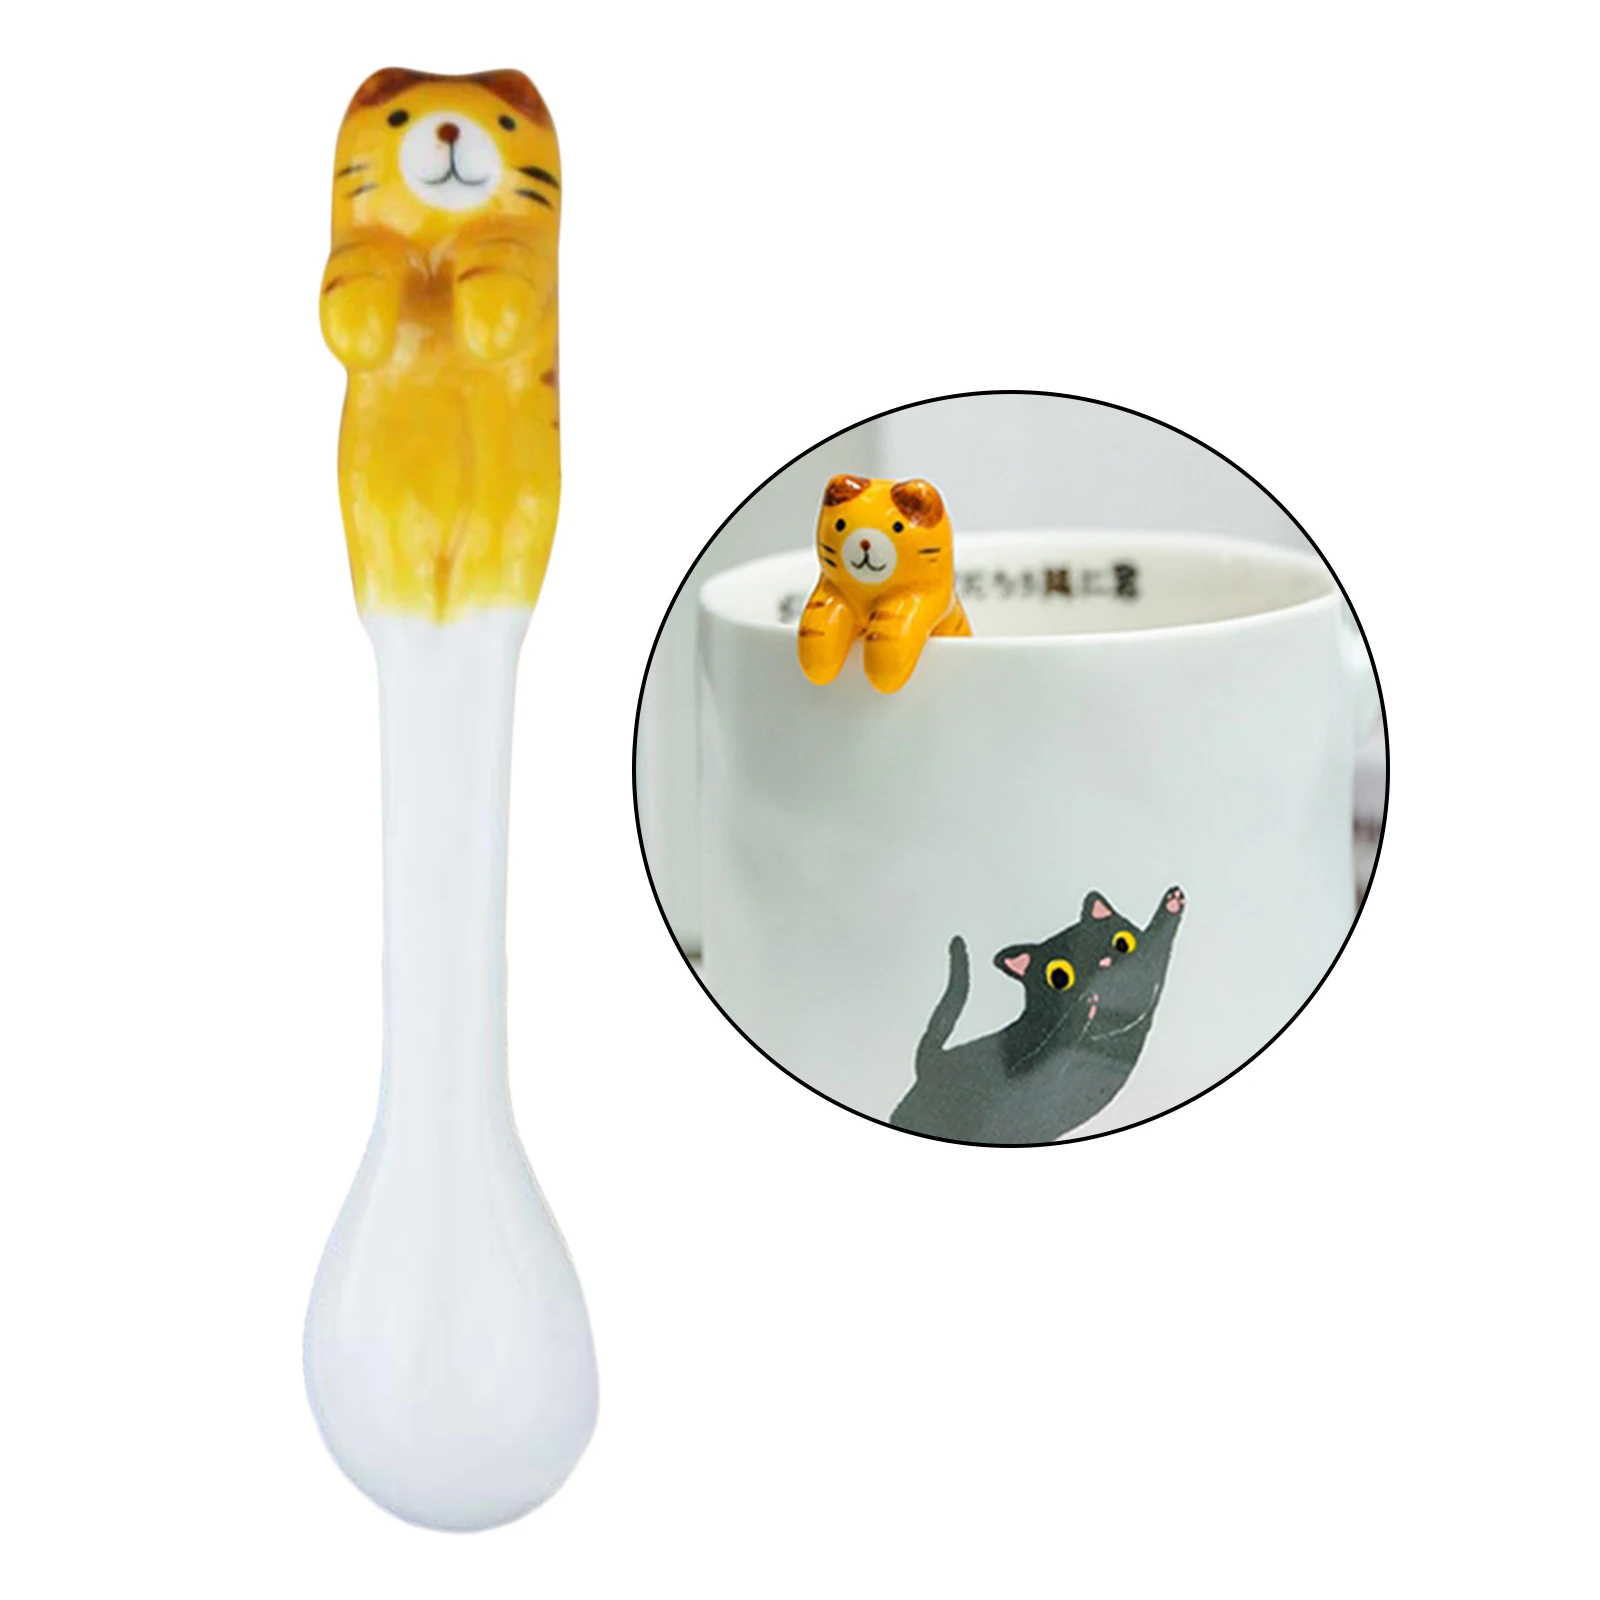 Cute Creative Spoon Cat Design Espresso Spoons Iced Tea Spoon Teaspoons for Dessert Coffee Sugar Cake Ice Cream Home Kitchen